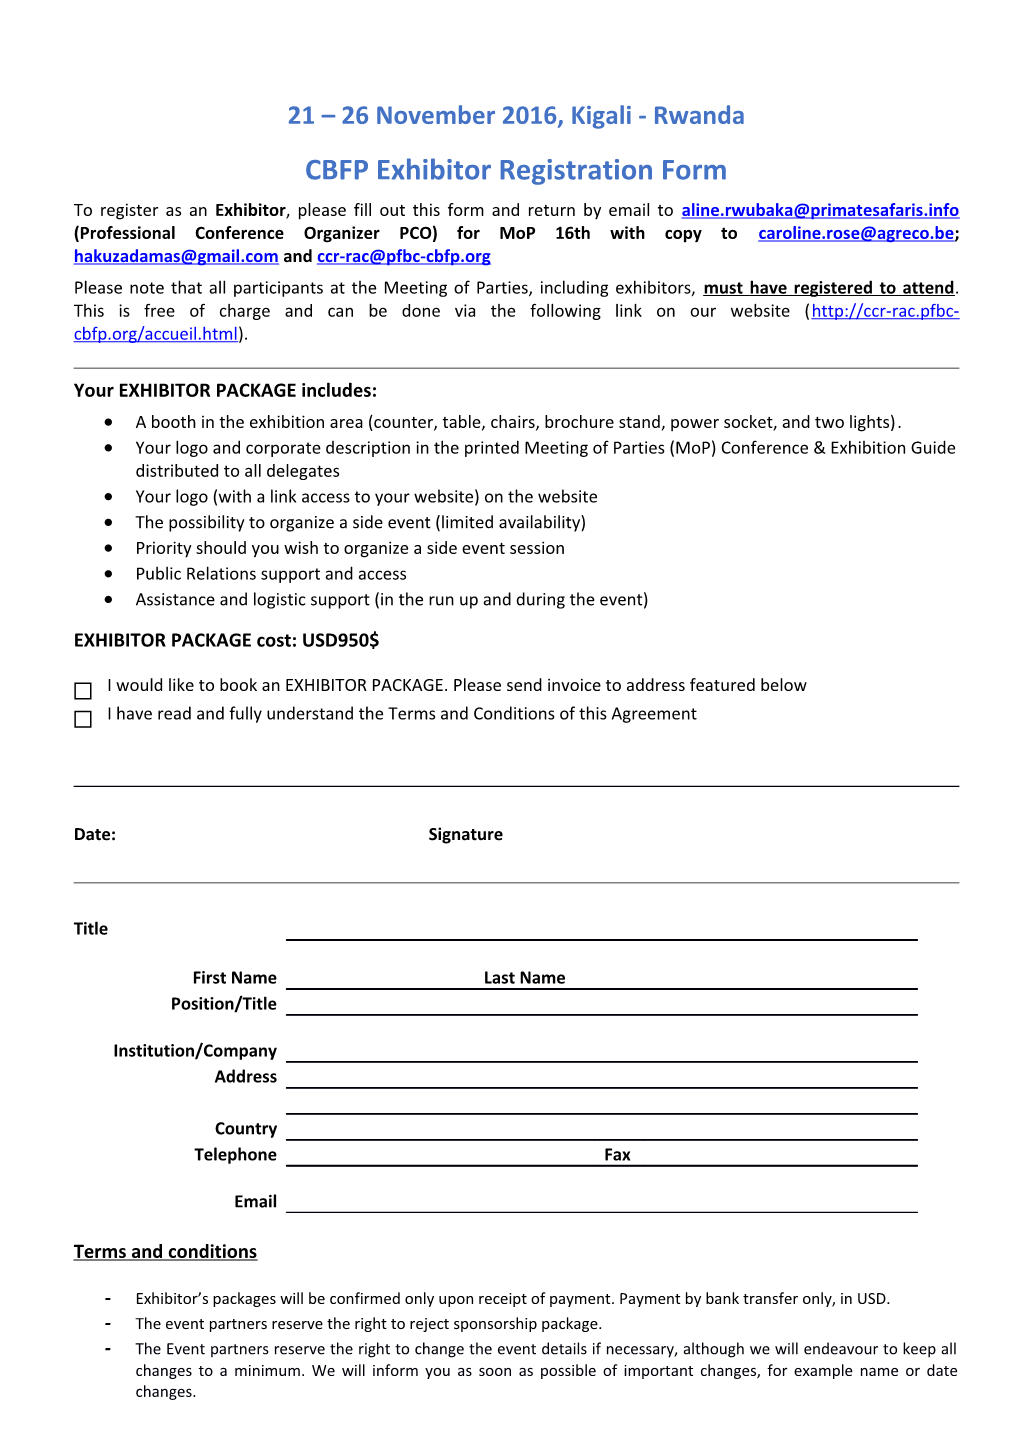 CBFP Exhibitor Registration Form